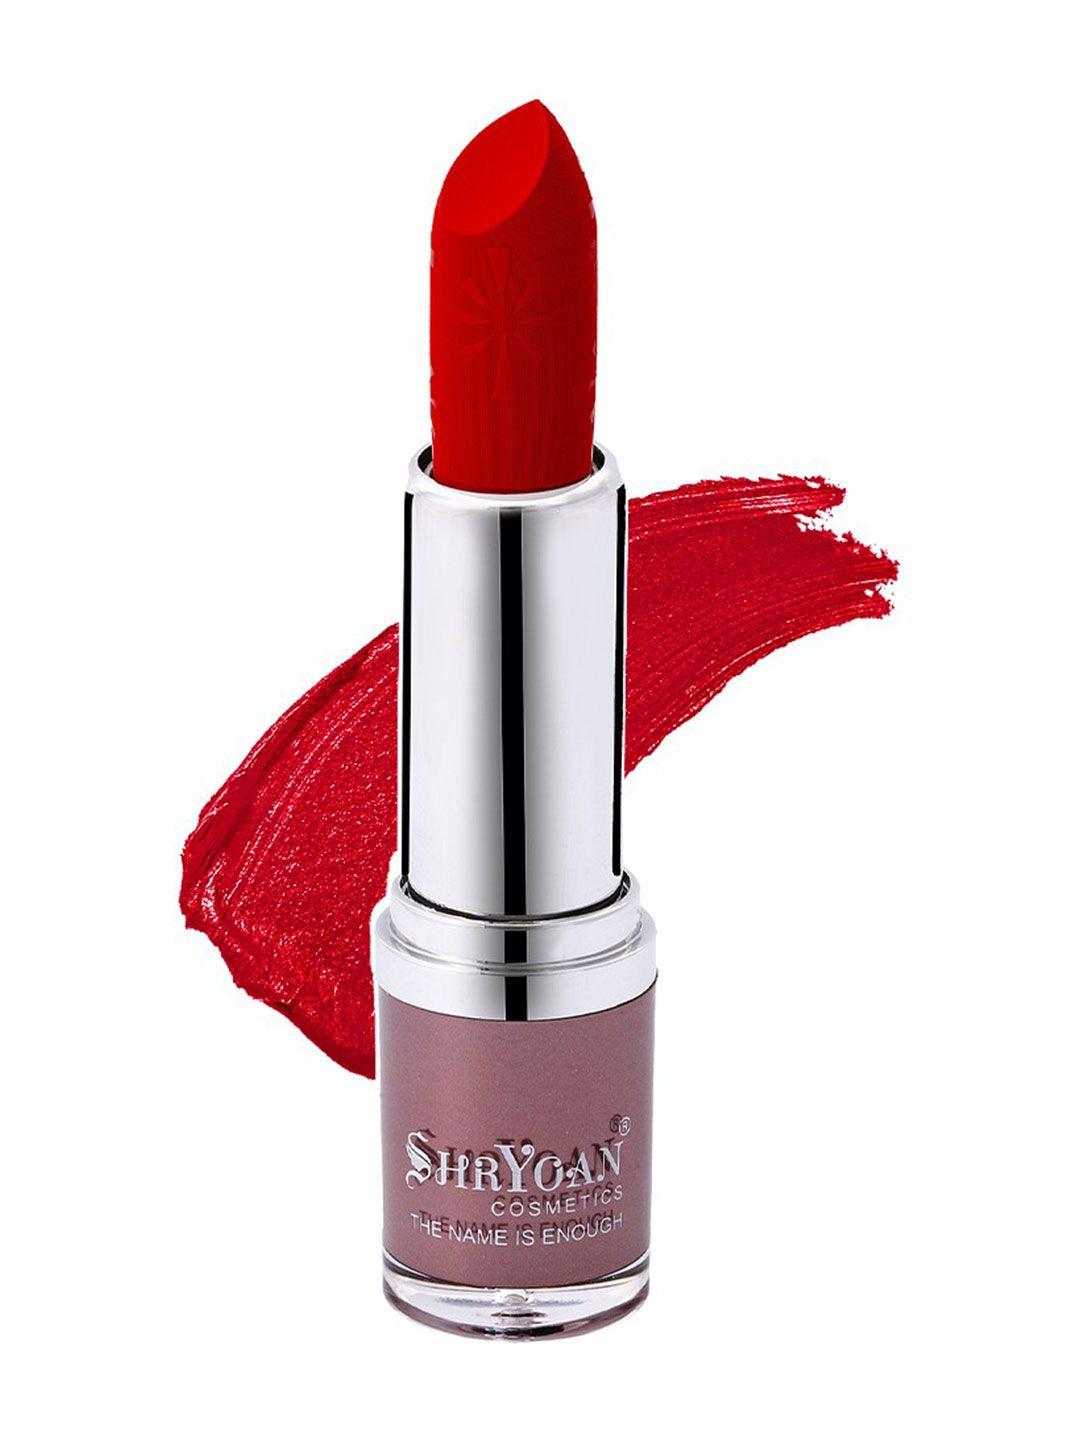 shryoan the name is enough matte lipstick 3.8 g - emerald